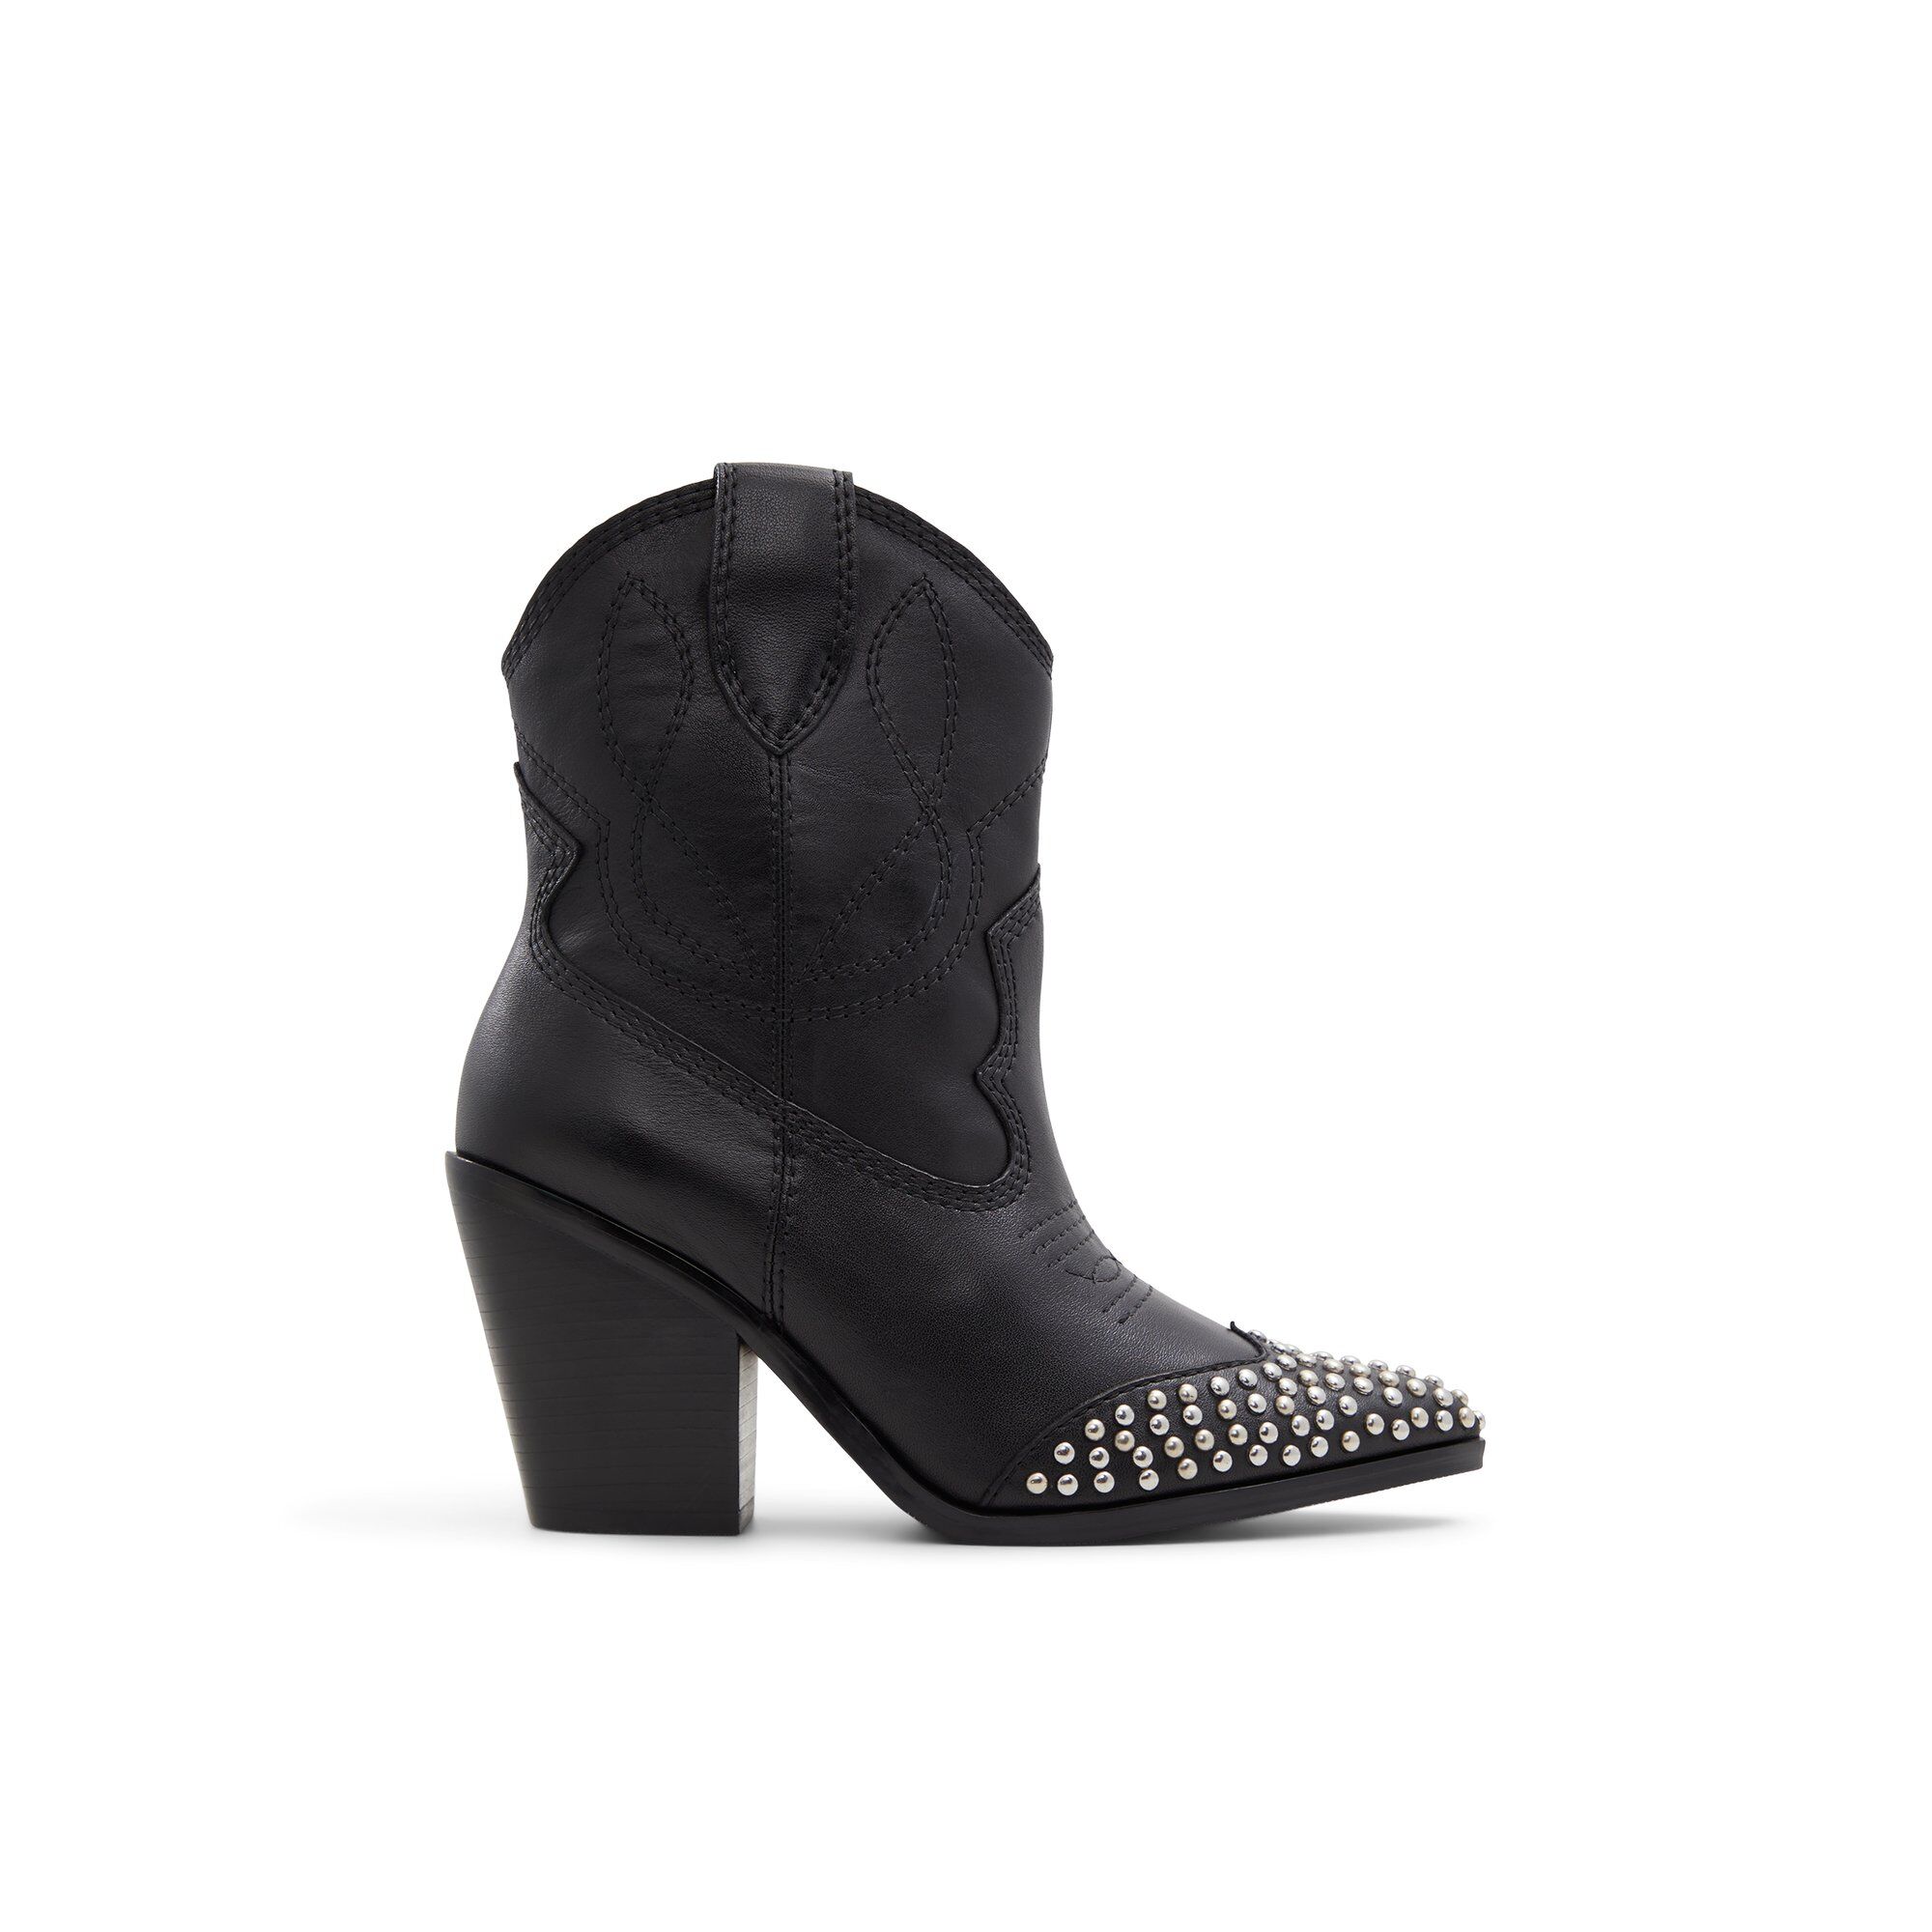 ALDO Omaha - Women's Ankle Boot - Black, Size 5